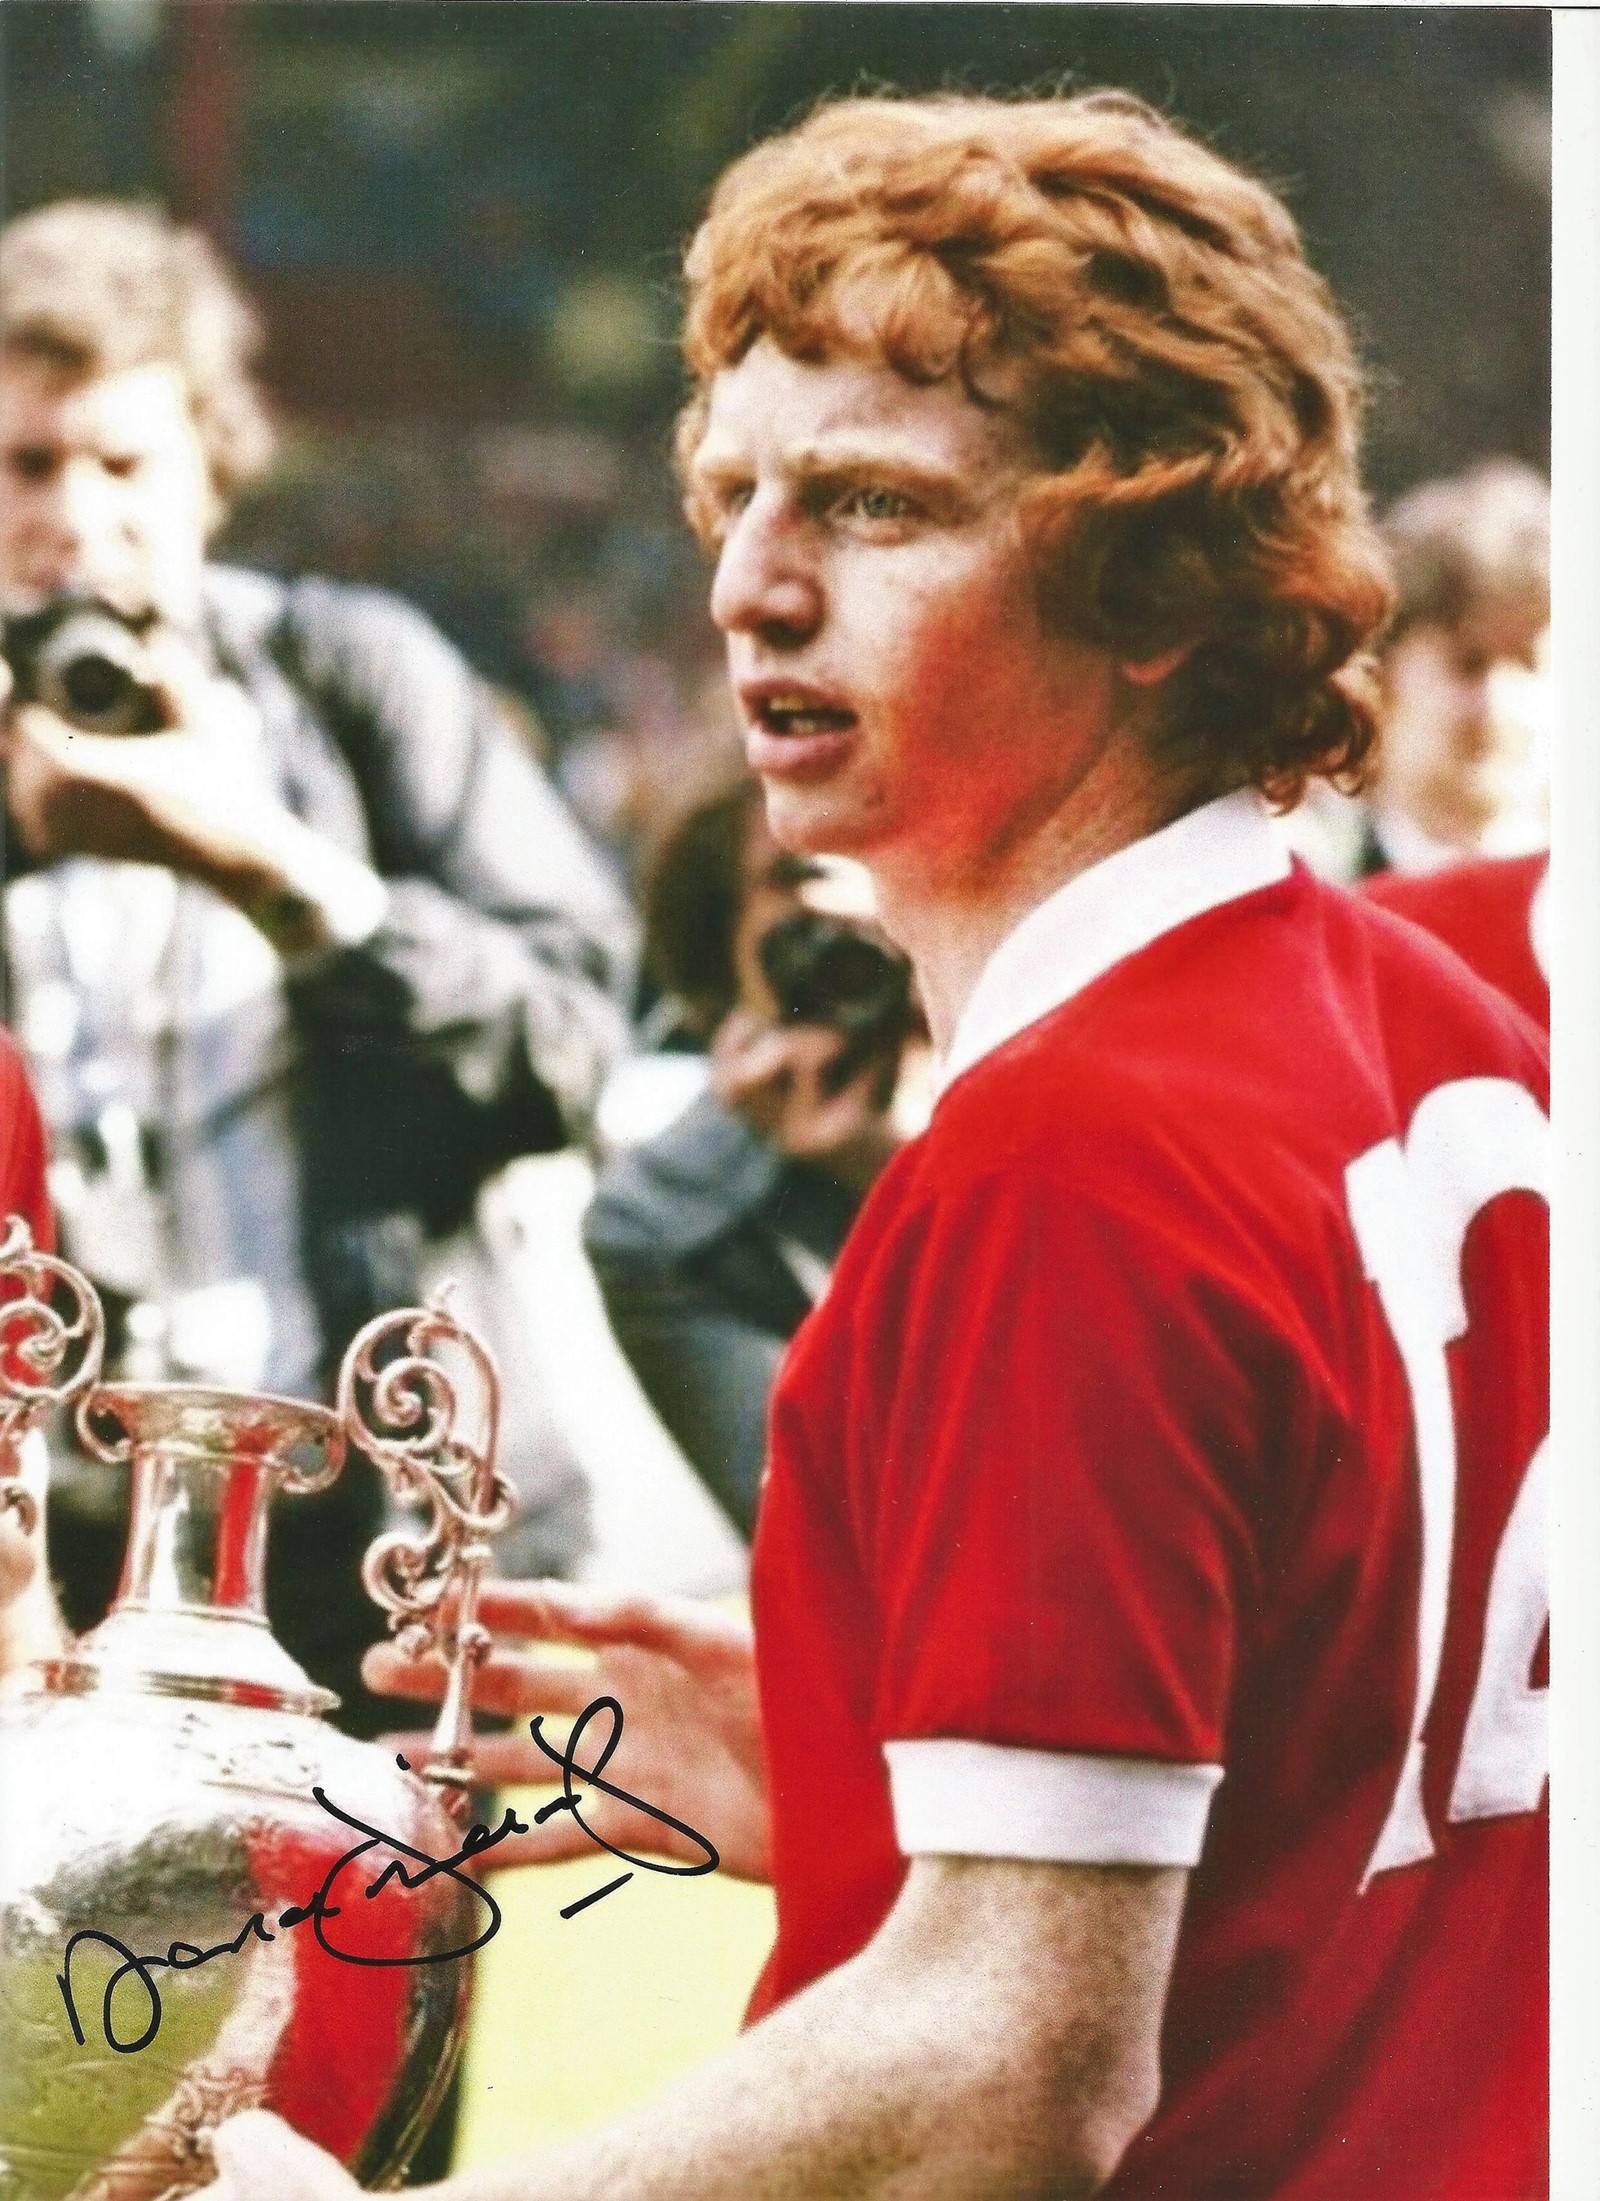 Football David Fairclough signed 12x8 Liverpool colour photo. David Fairclough (born Liverpool, 5